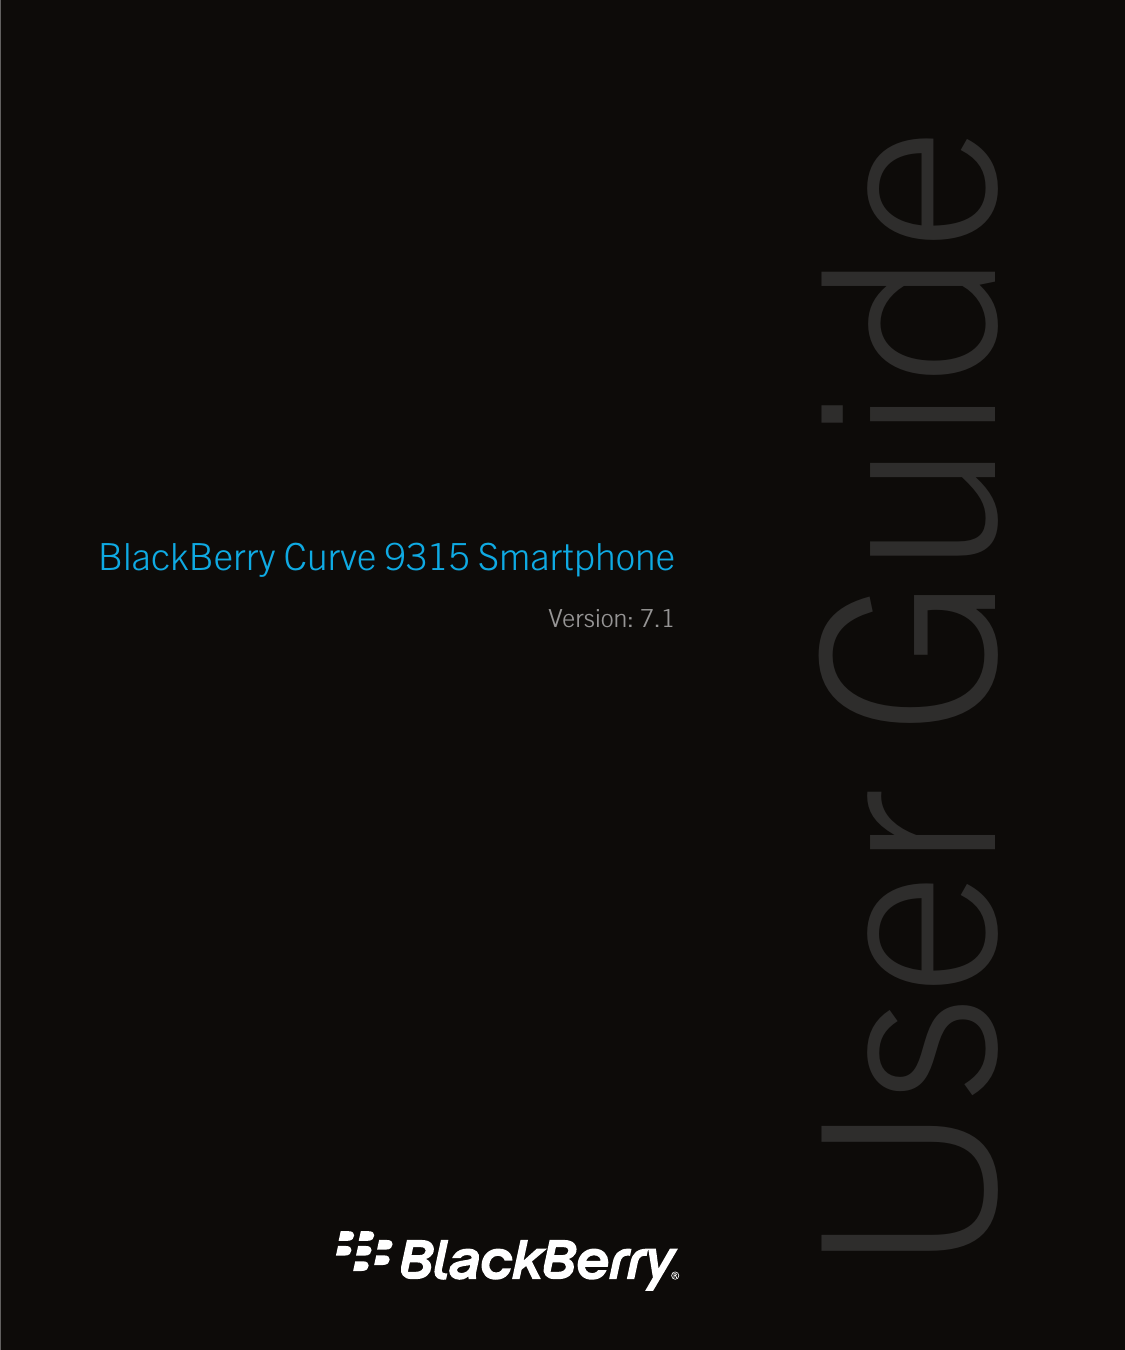 BlackBerry Curve 9315 SmartphoneVersion: 7.1User Guide